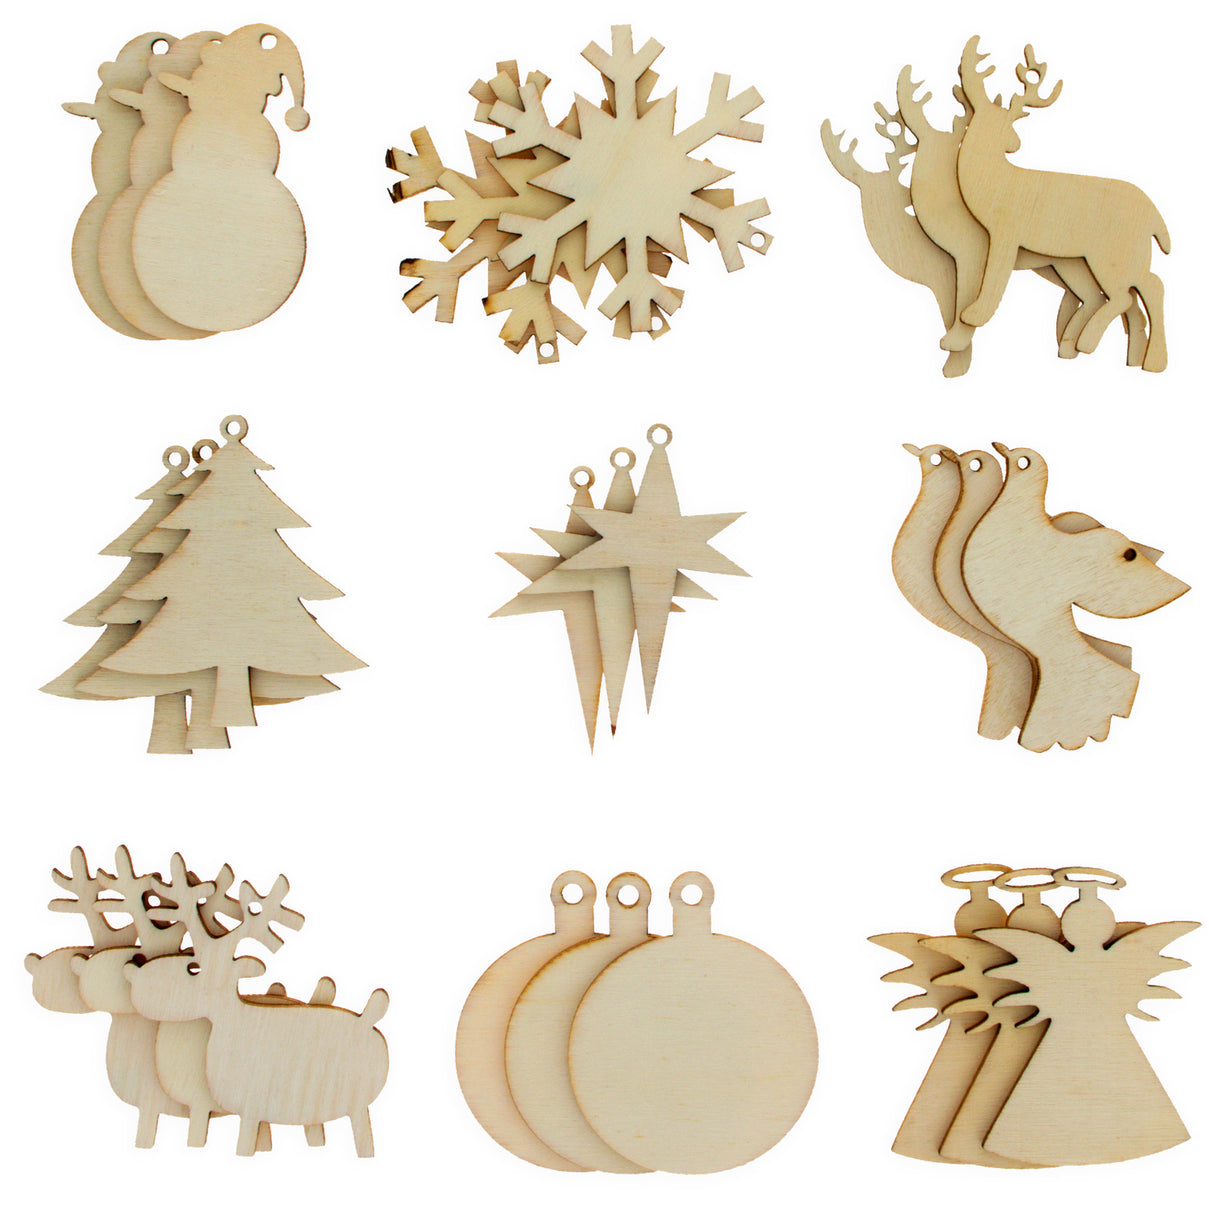 Festive Creativity: Set of 9 Wooden Christmas Shape Cutouts in Beige color,  shape